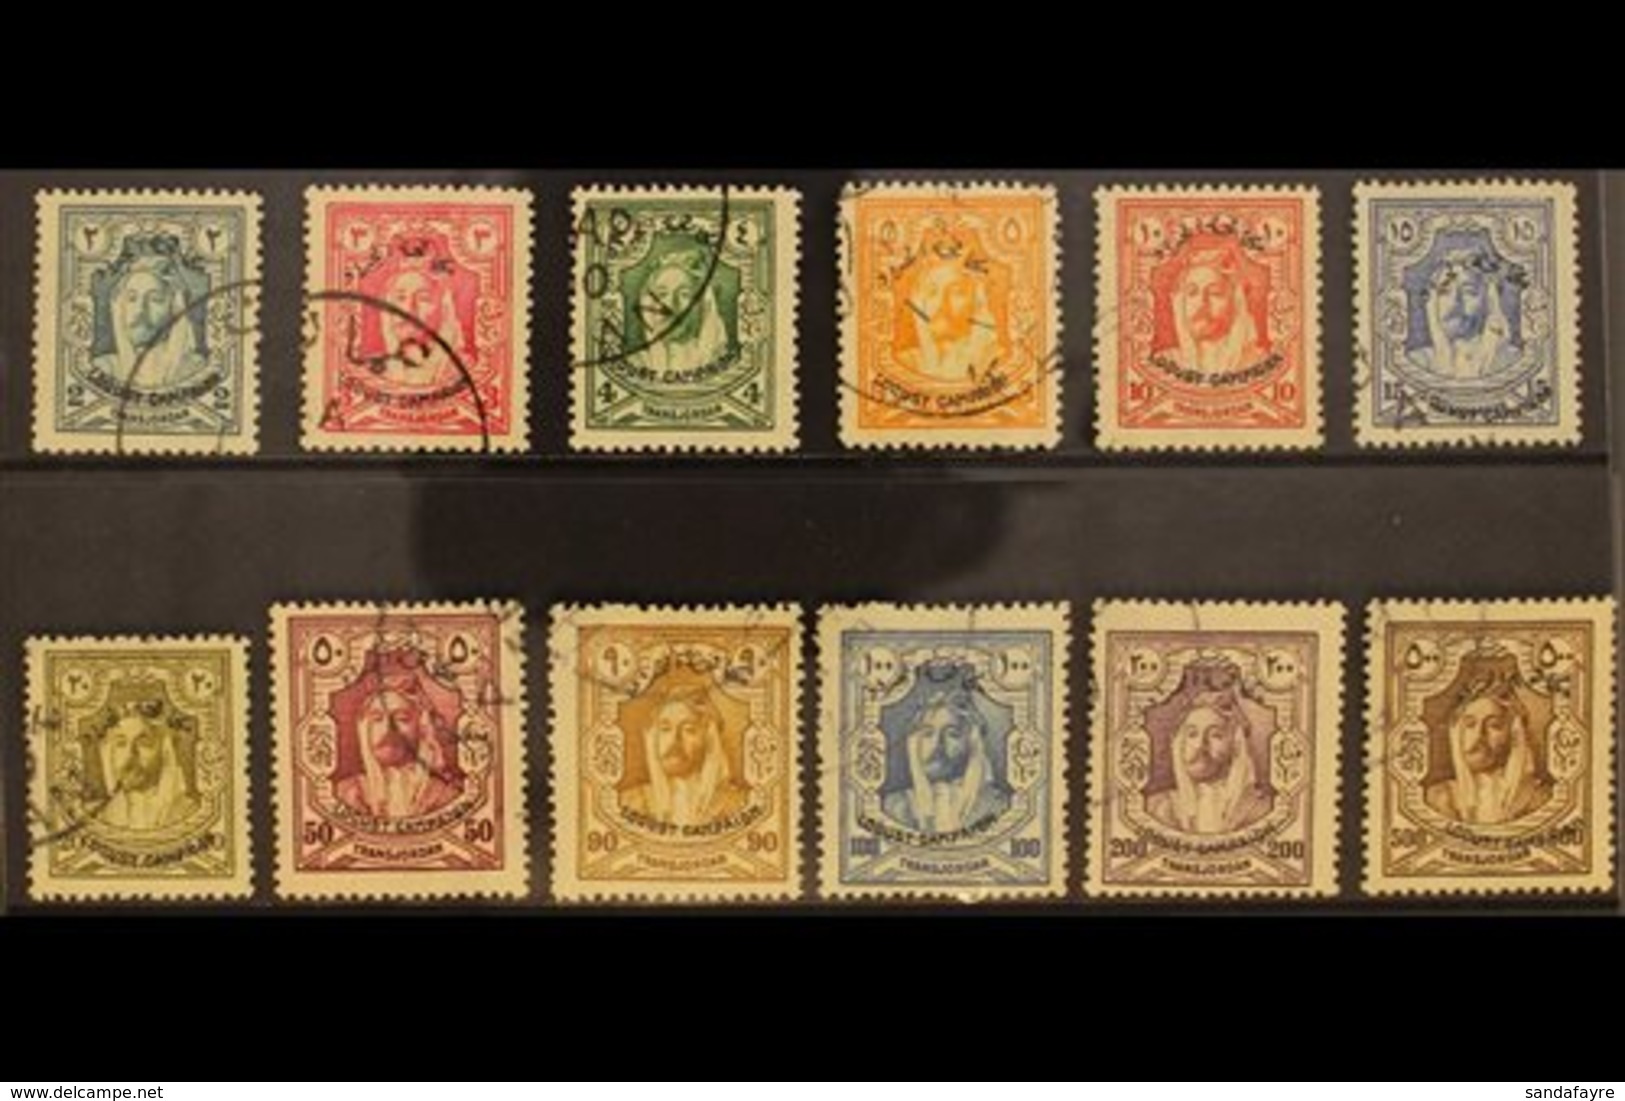 1930 LOCUST CAMPAIGN  Emir "Locust Campaign" Overprinted Set, SG 183/94, Fine Used (12 Stamps) For More Images, Please V - Jordan